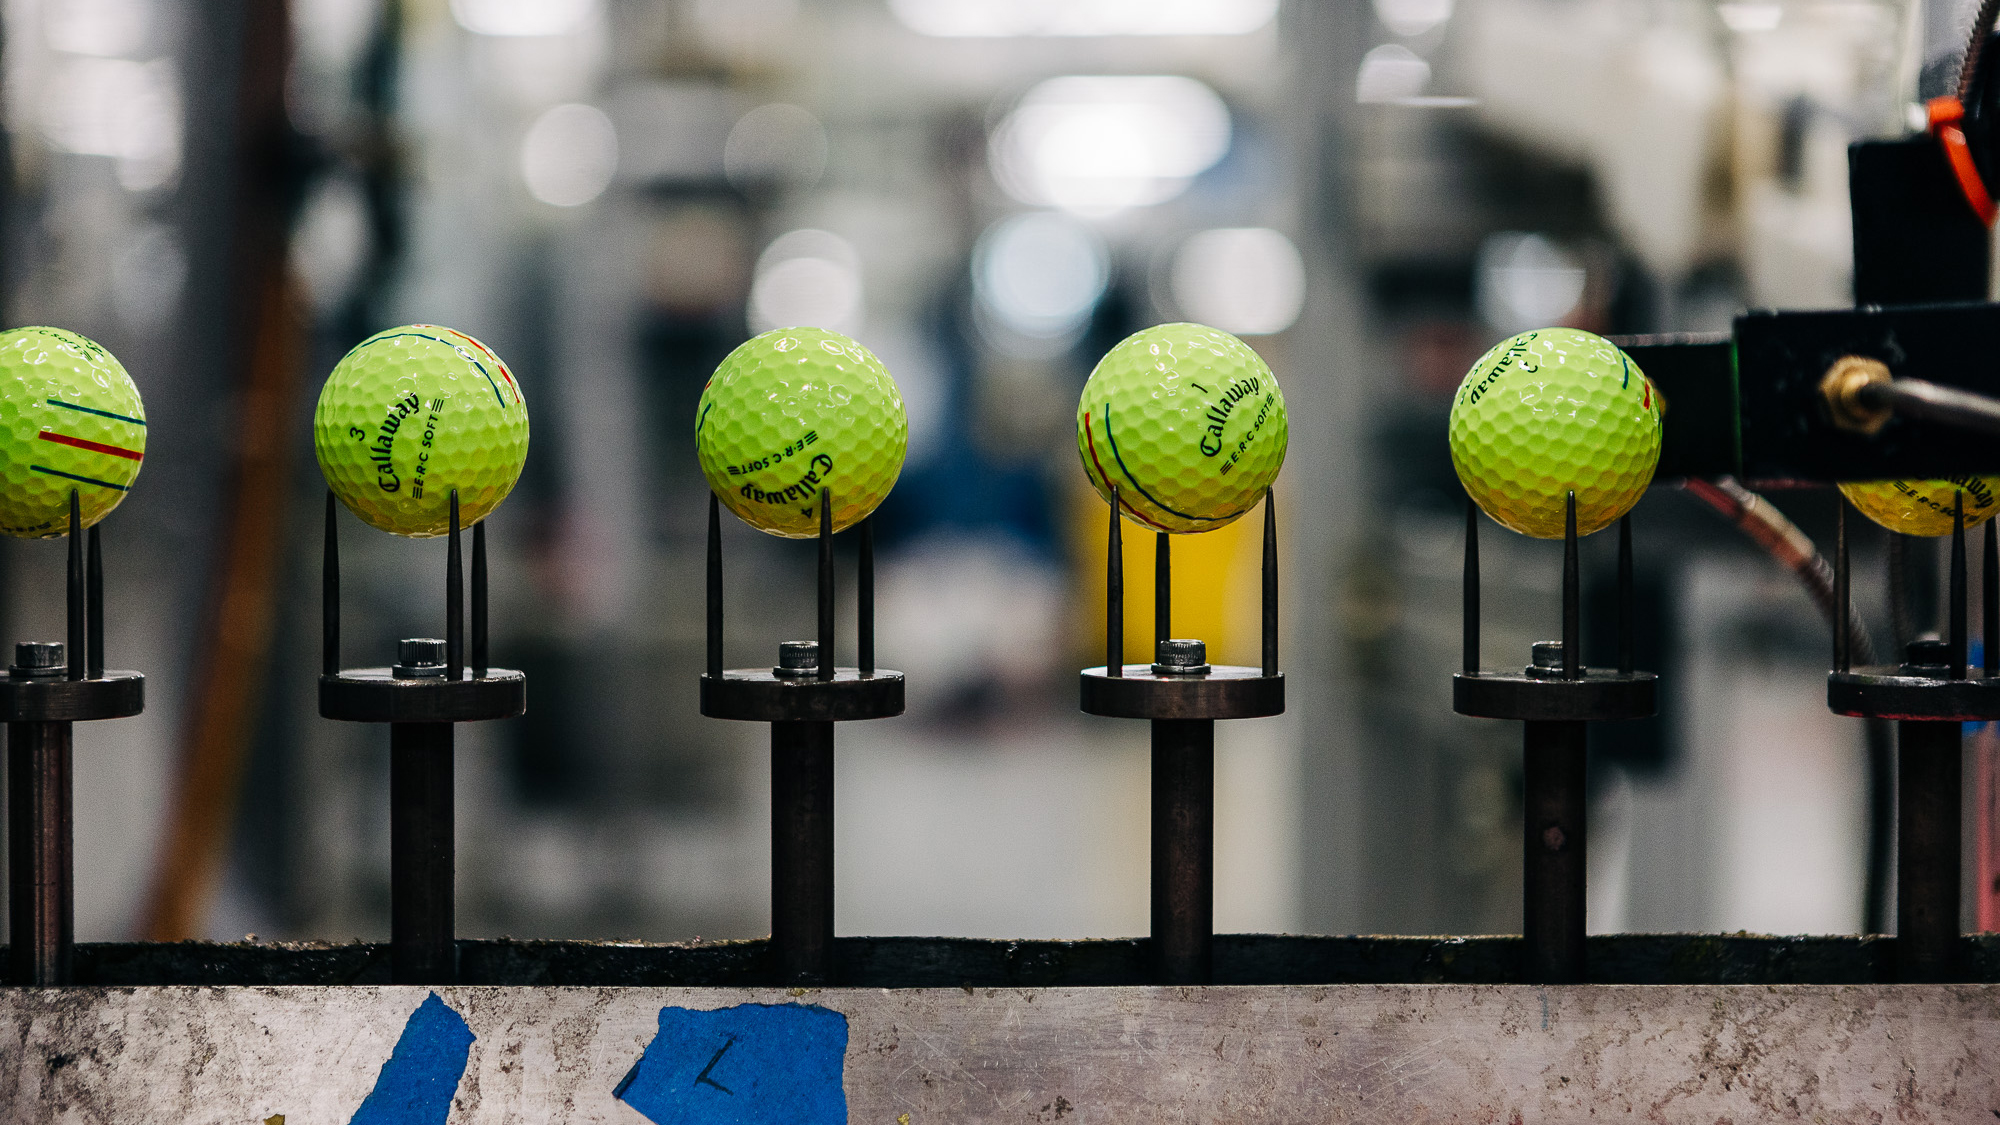 A peek inside Callaway’s factory reveals the complex anatomy of high-end golf balls